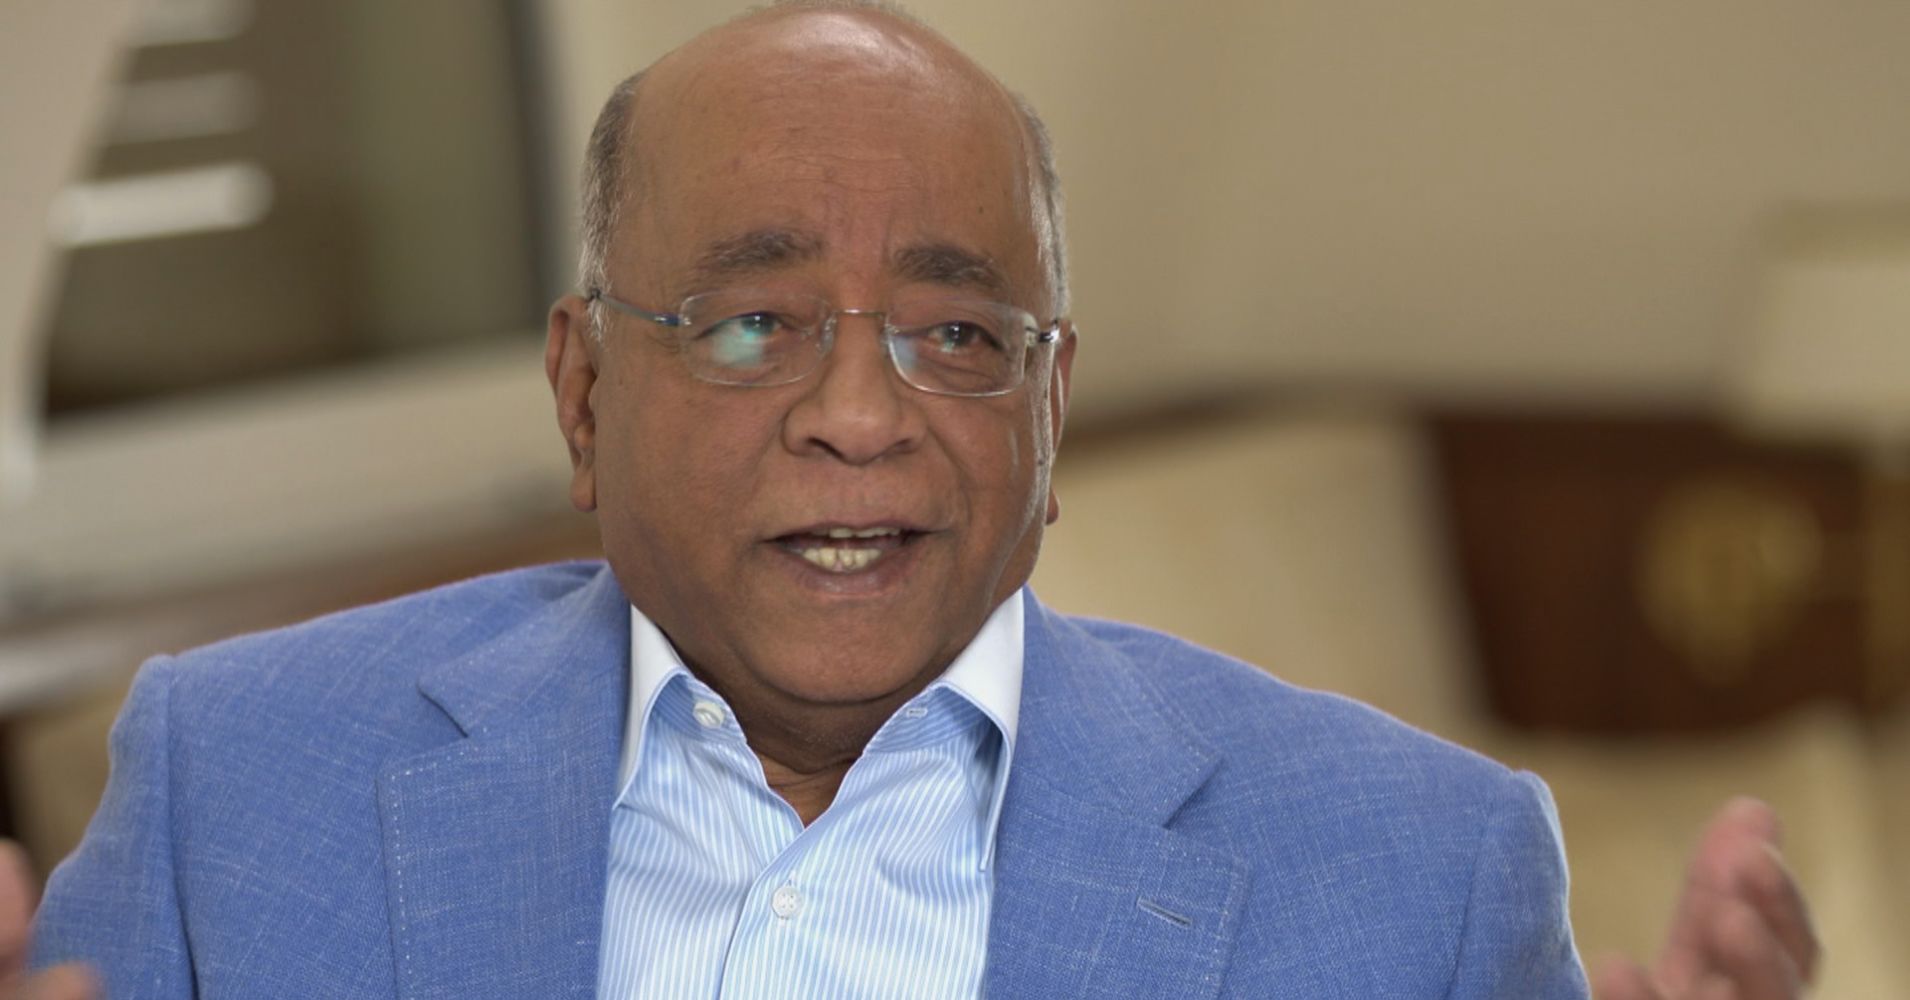 Mo Ibrahim, the telco entrepreneur and chair of the Mo Ibrahim Foundation